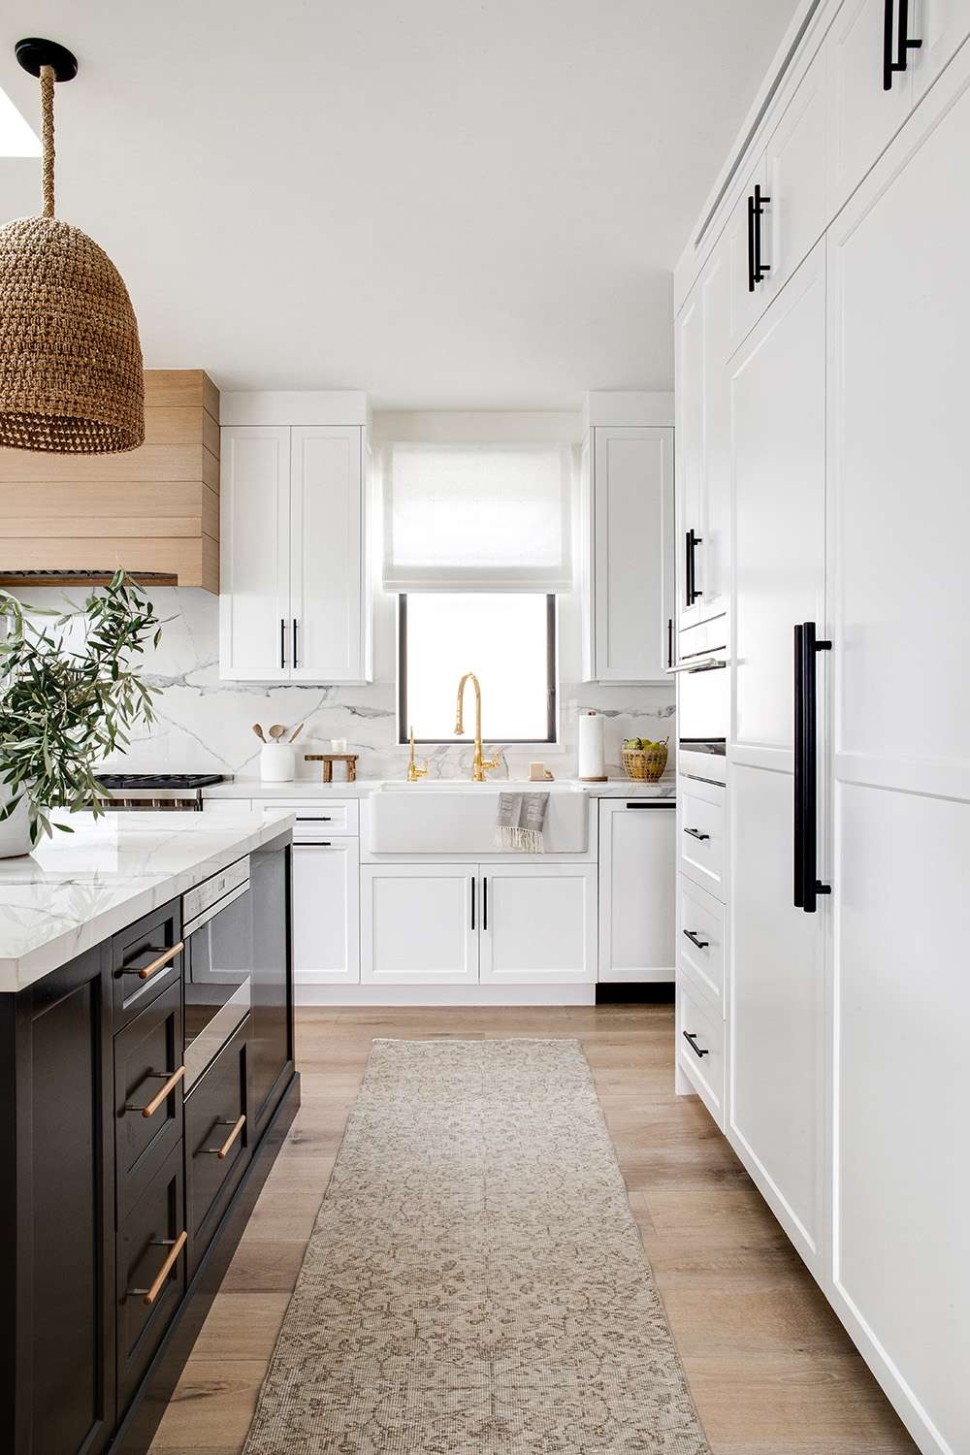 8 Lovely White Kitchen Cabinet Ideas We